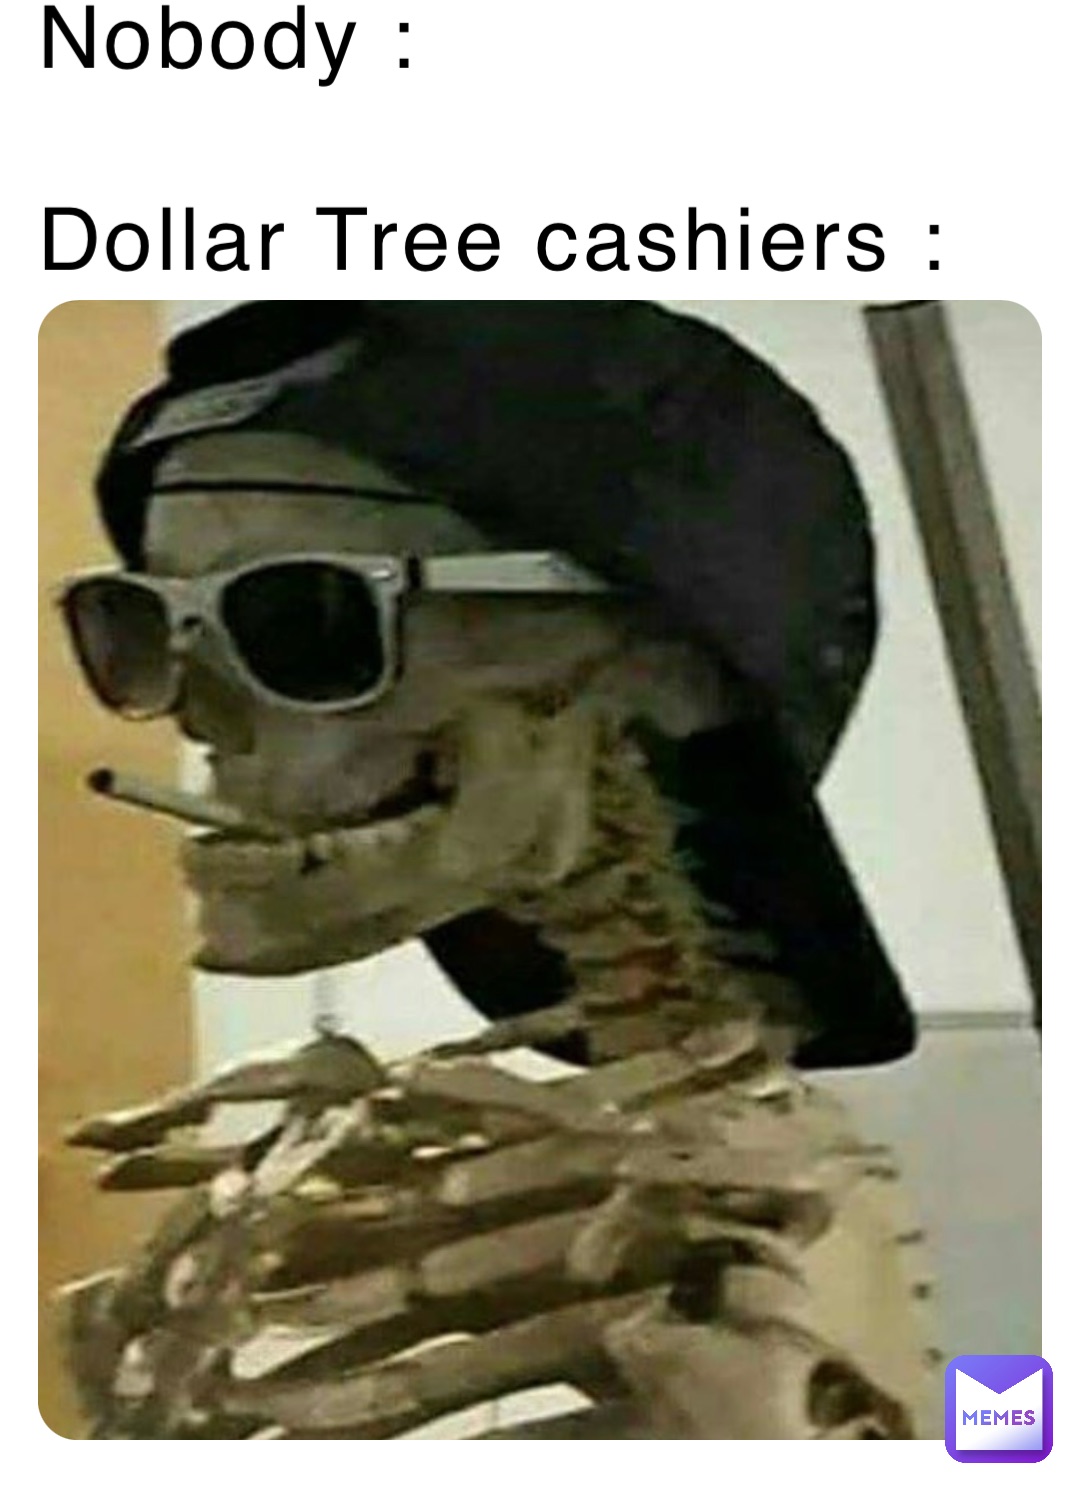 Nobody : 

Dollar Tree cashiers :